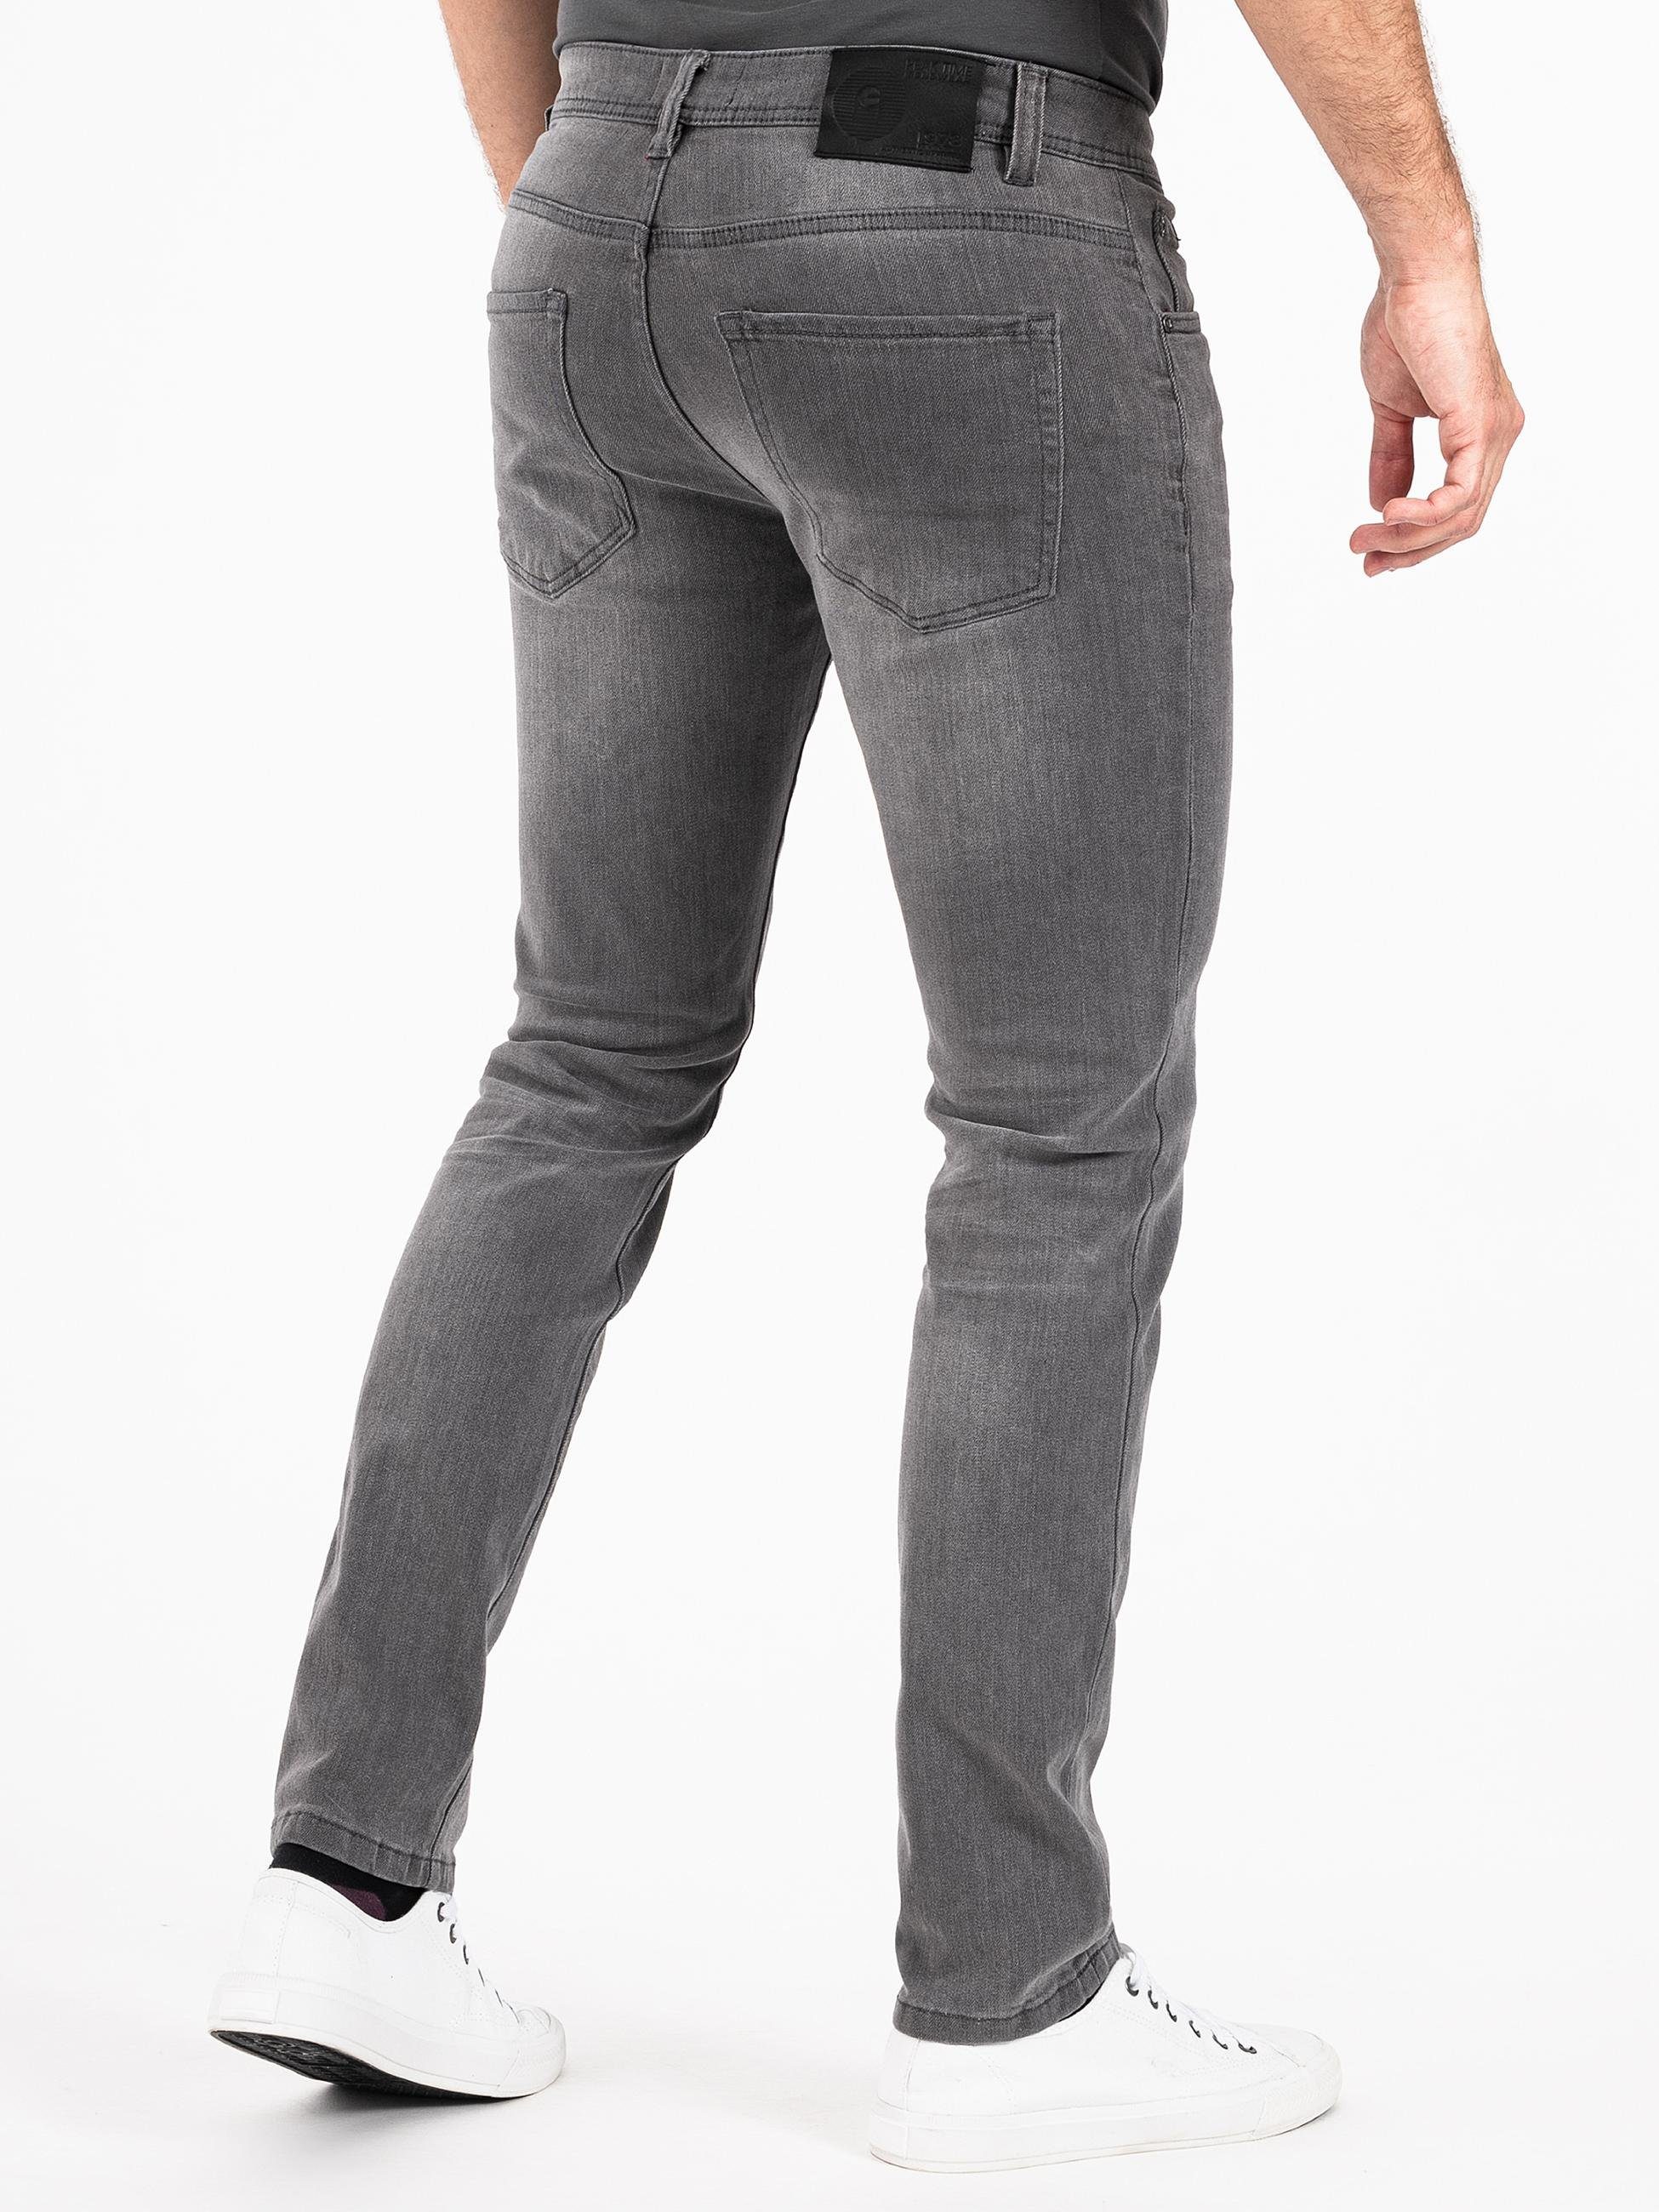 Jeans hellgrau PEAK mit TIME Herren hohem Stretch-Anteil Slim-fit-Jeans super Mailand